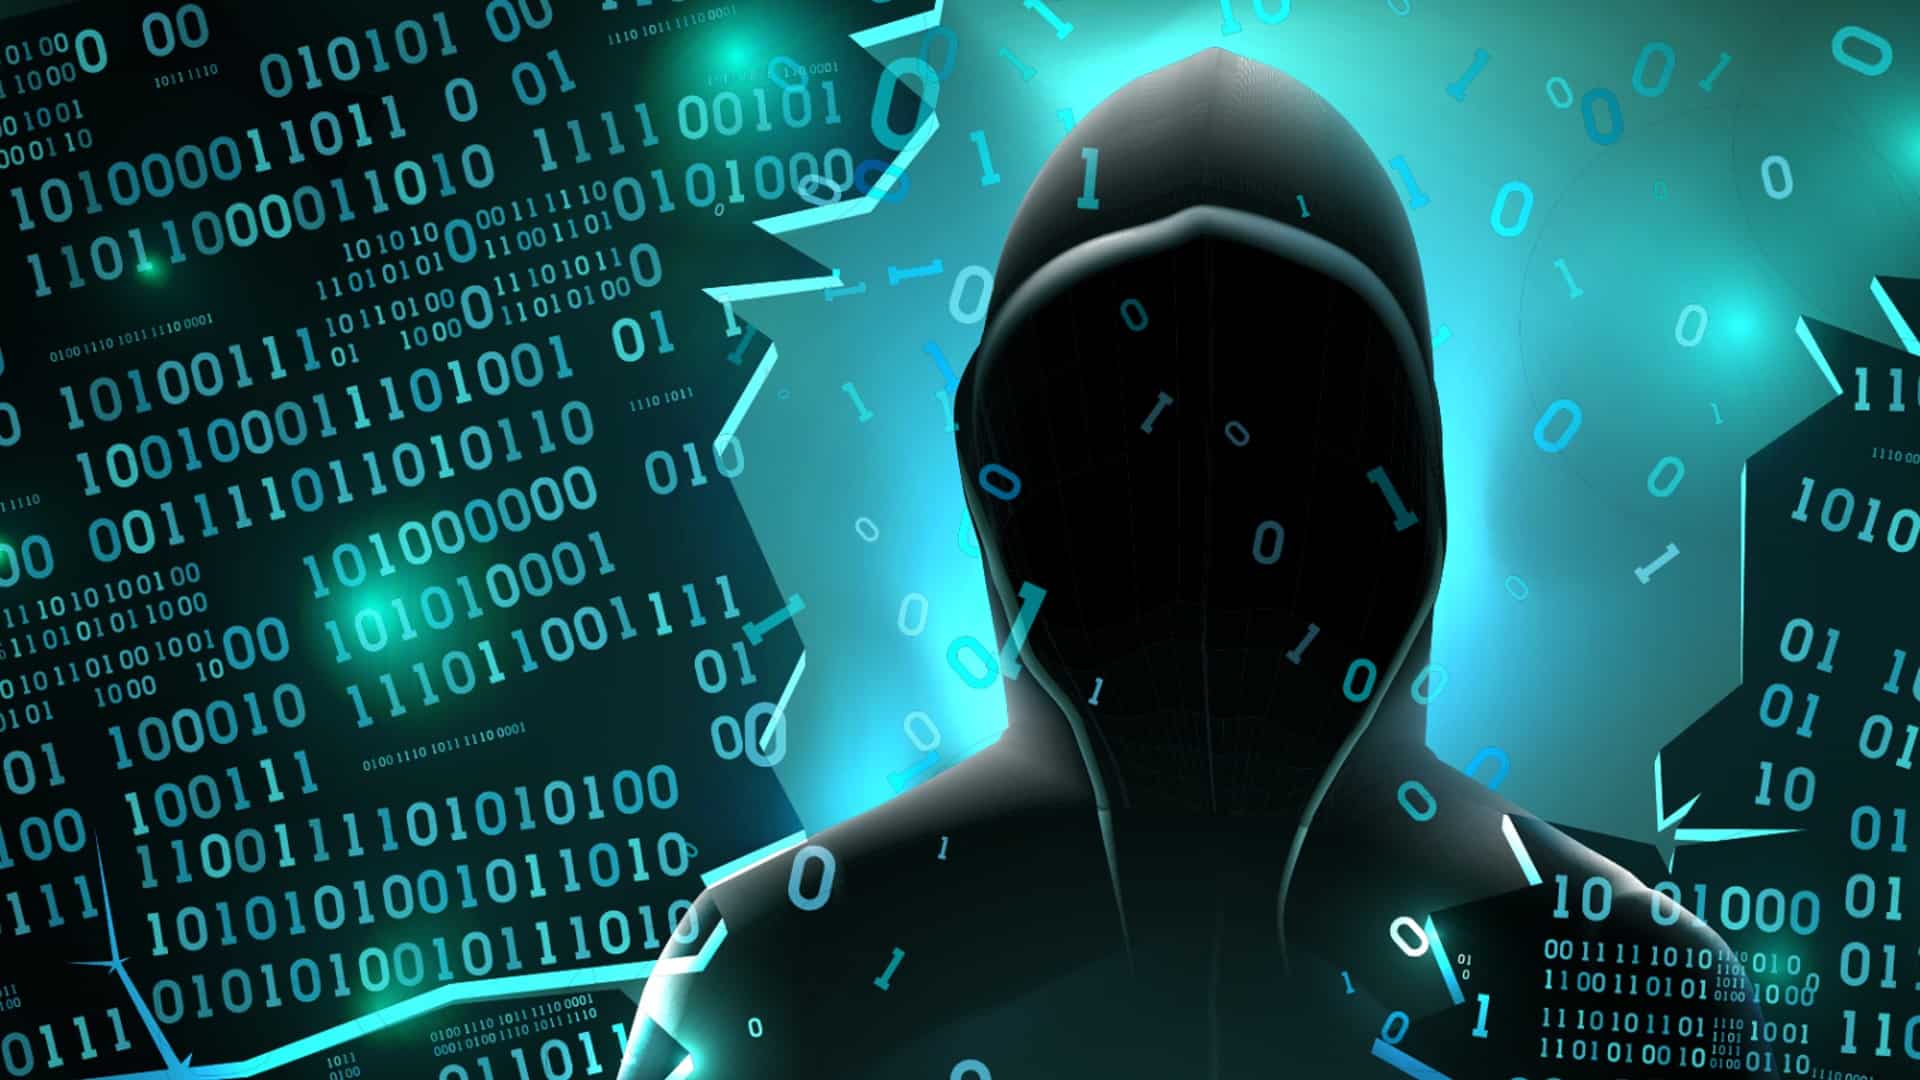 Philadelphia čelí kybernetickému útoku